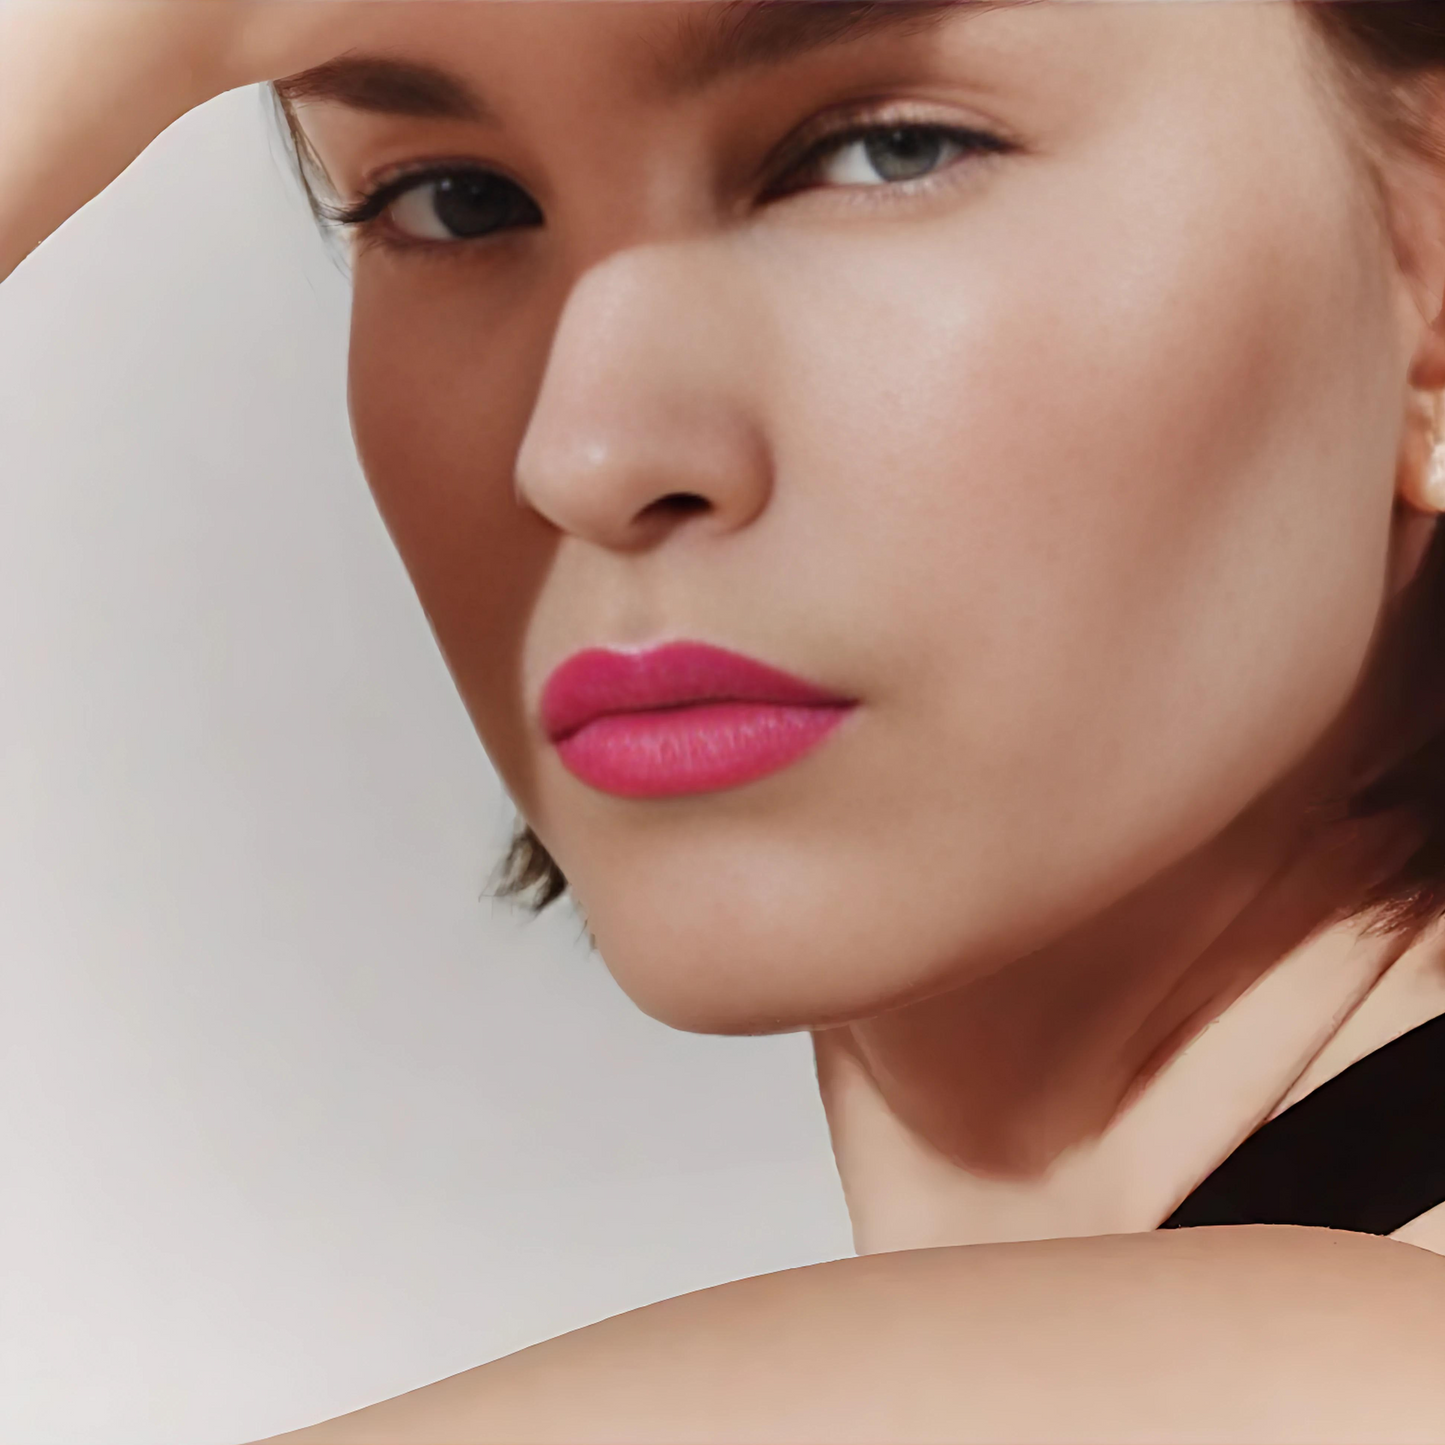 Hermès Rouge Hermès - Matte Lipstick in Rose Pop (Limited Edition)